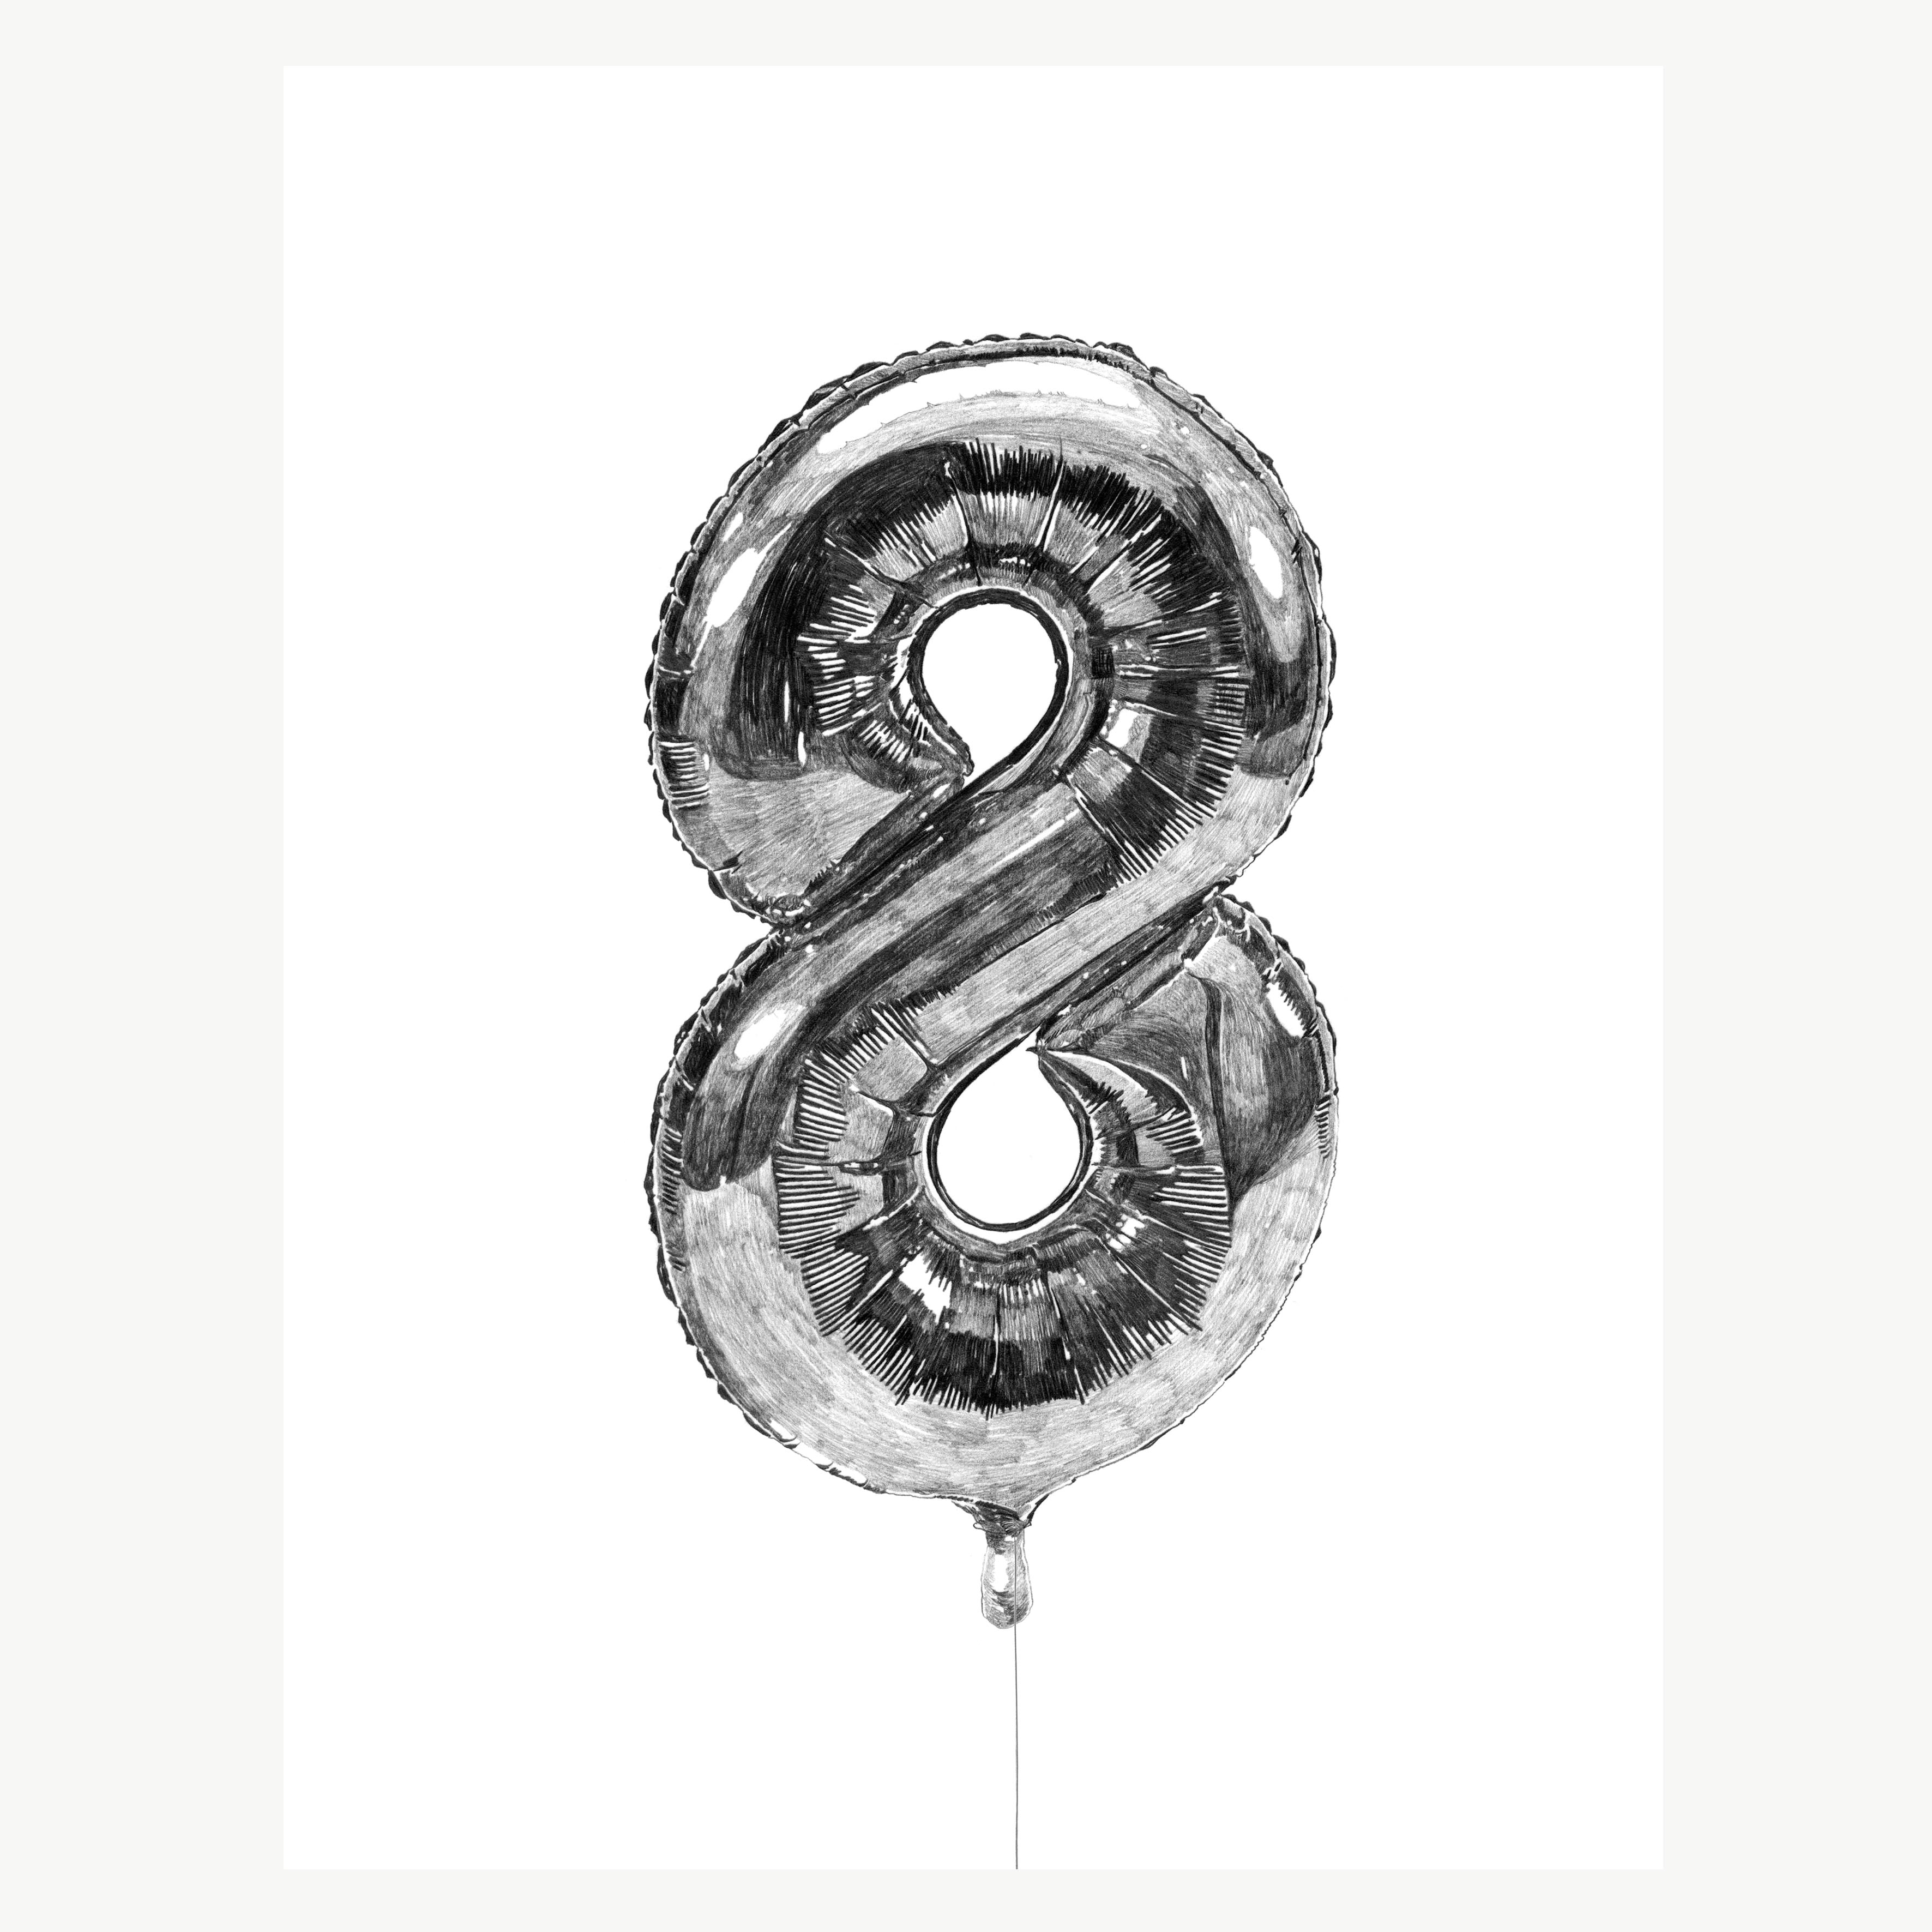 Number Balloon Prints